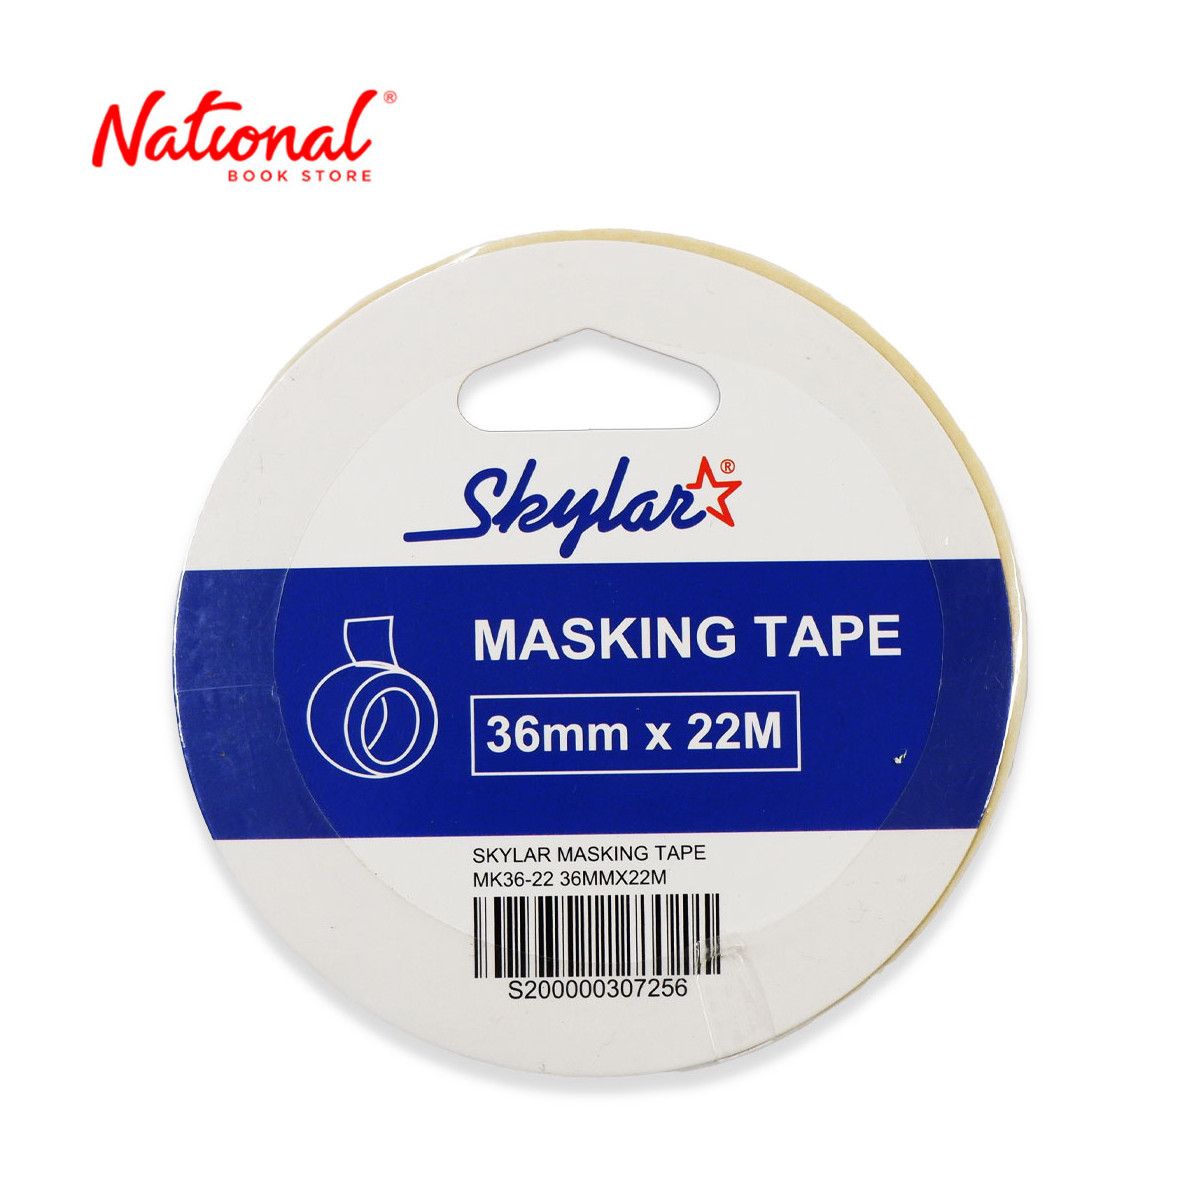 Skylar Masking Tape 36mmx22m MK36-22 -School & Office Essentials